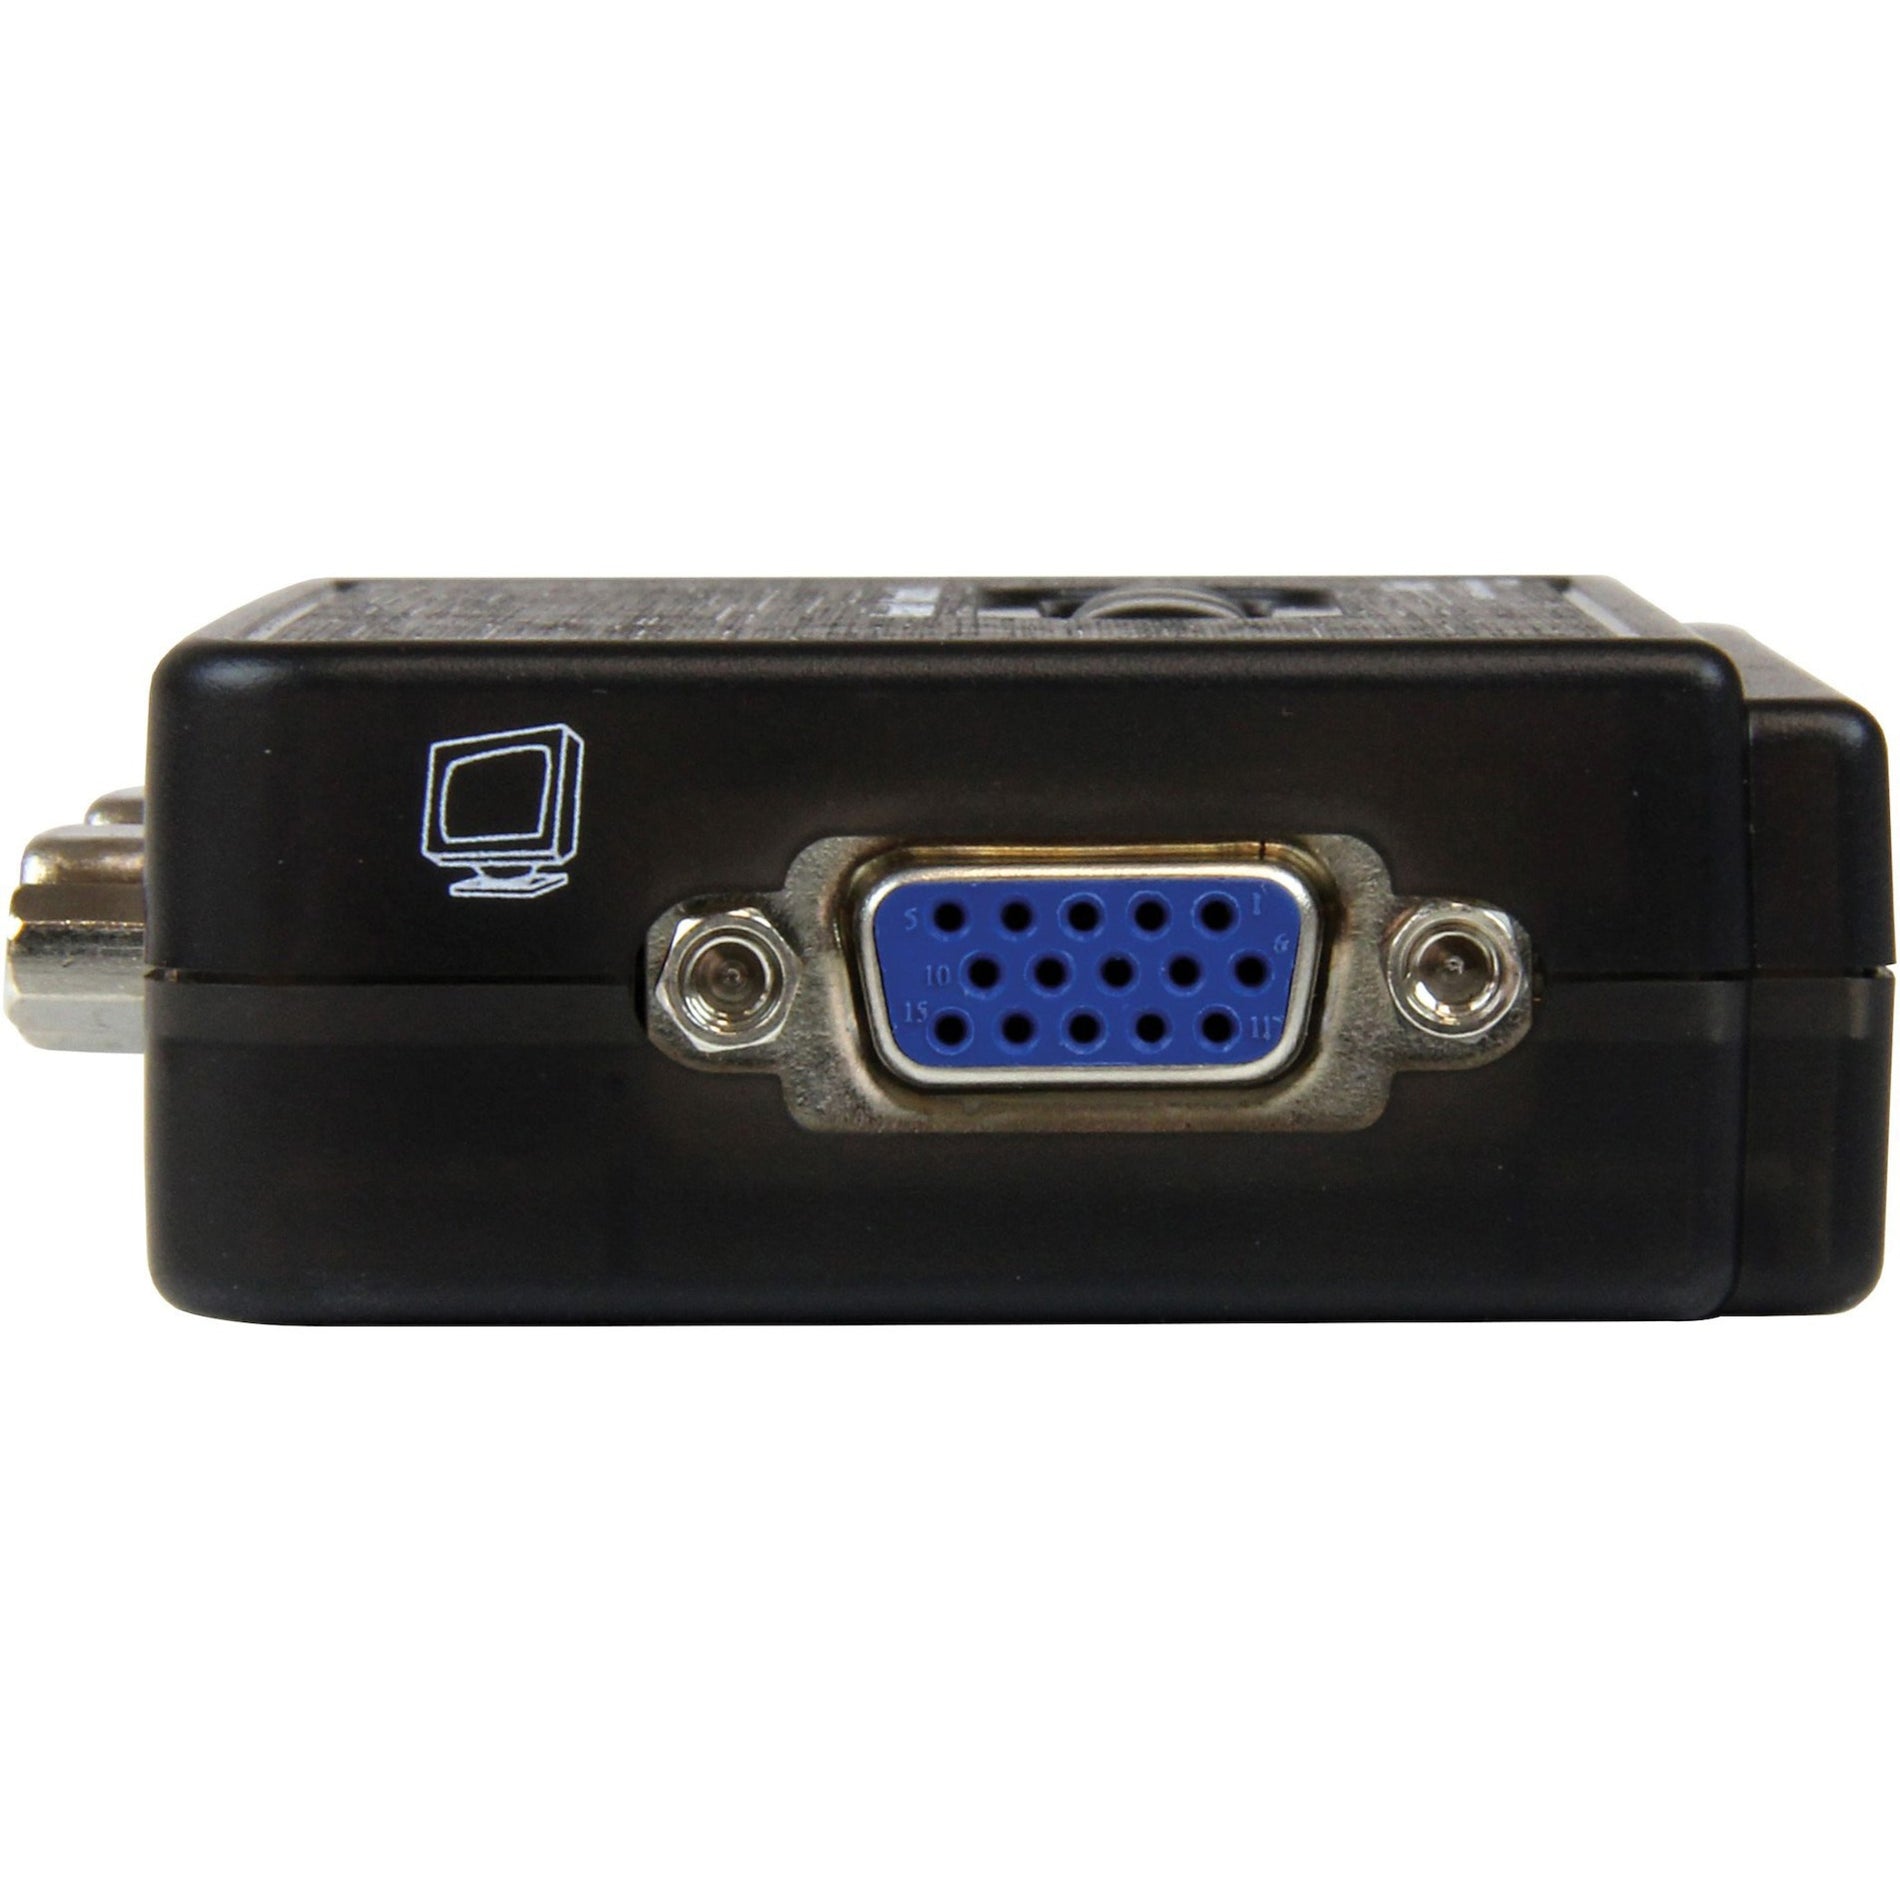 StarTech.com SV211KUSB 2 Port USB KVM Kit with Audio Switching, Easy Computer Control